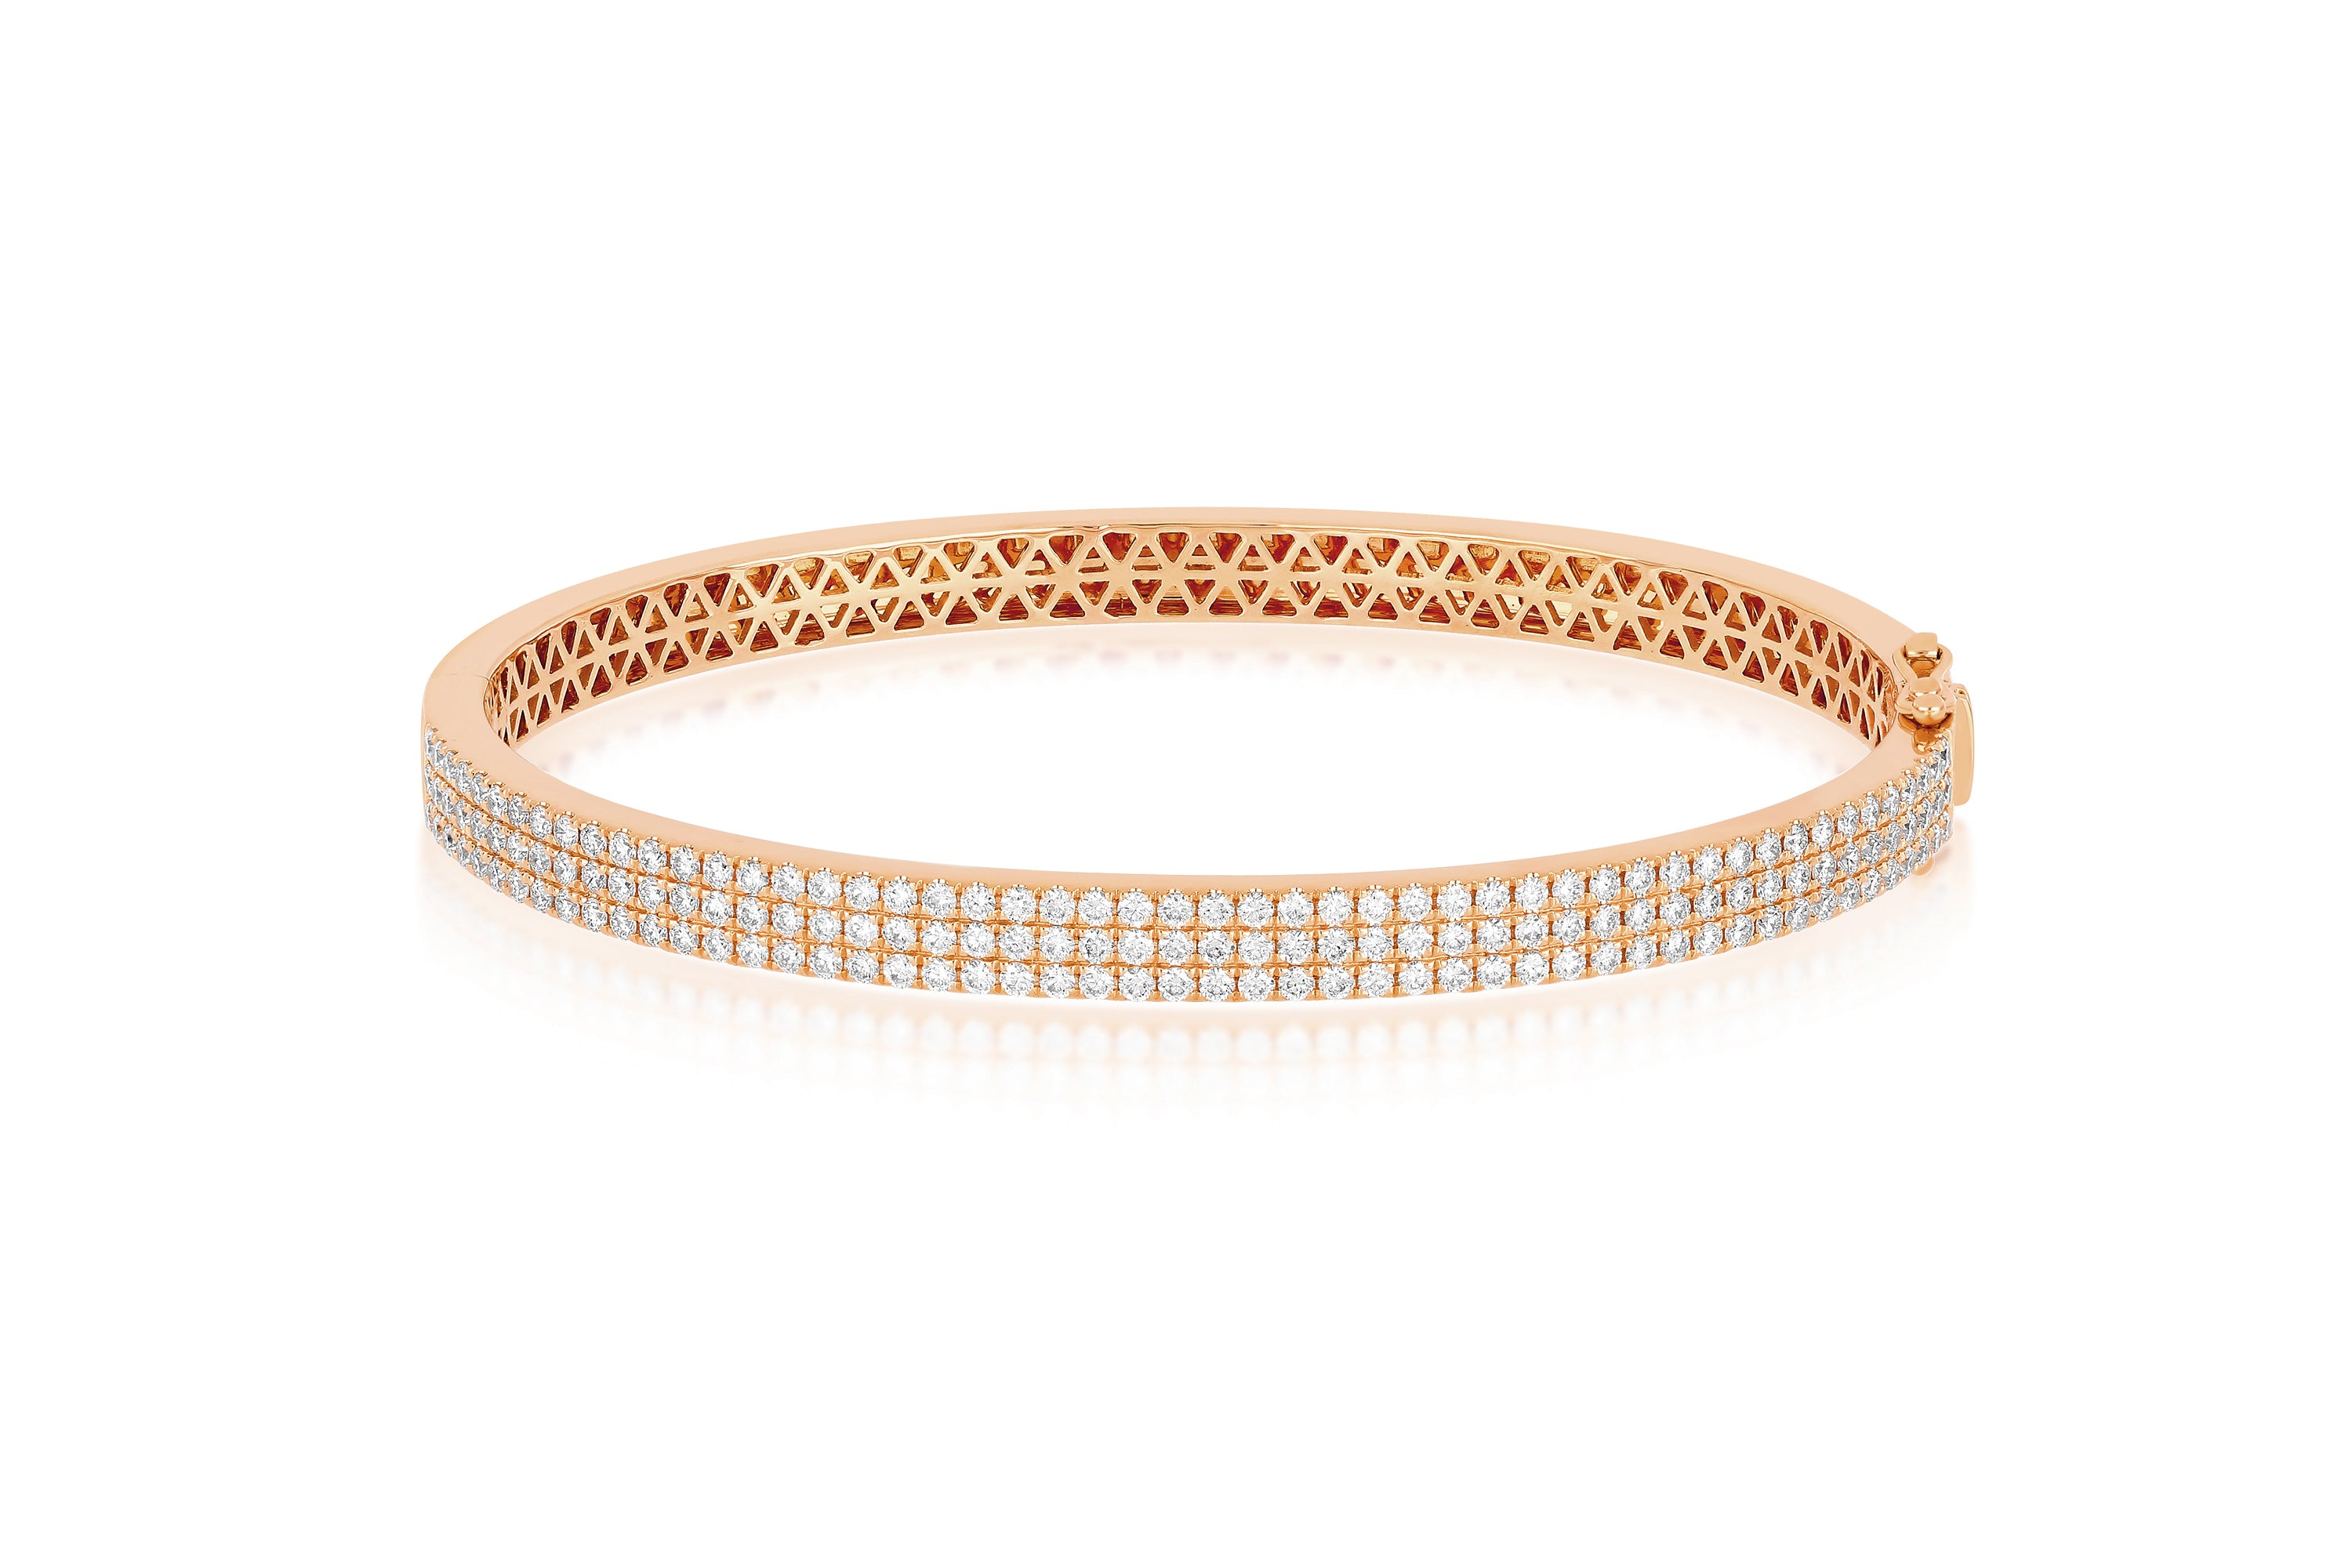 Encrusted Diamond Bracelet | Buy diamond bracelets online at rinayra.com